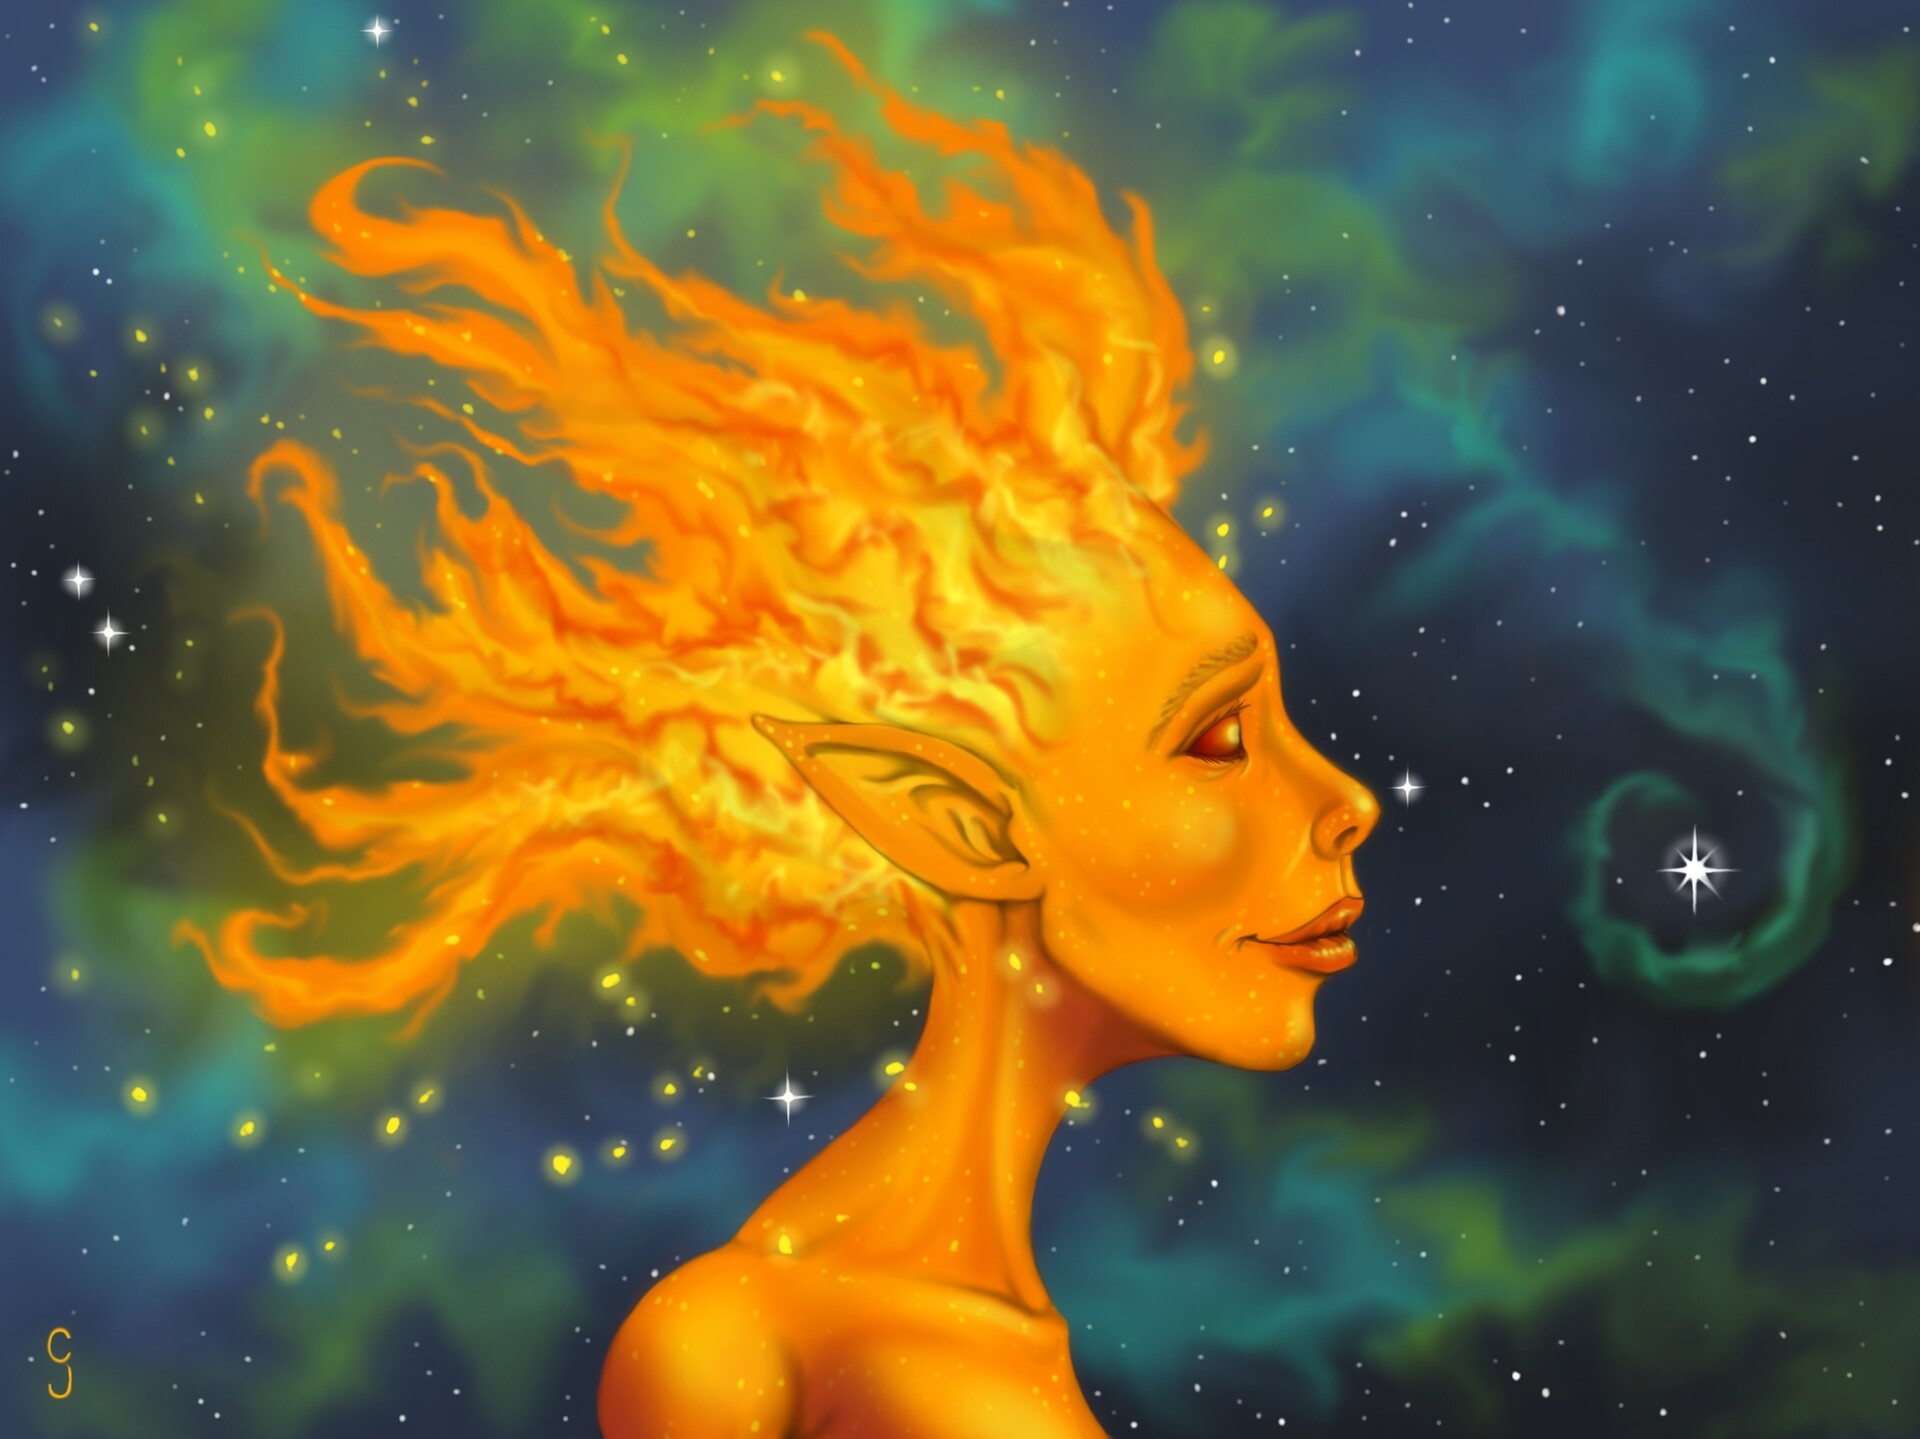 Alectrona goddess of the sun